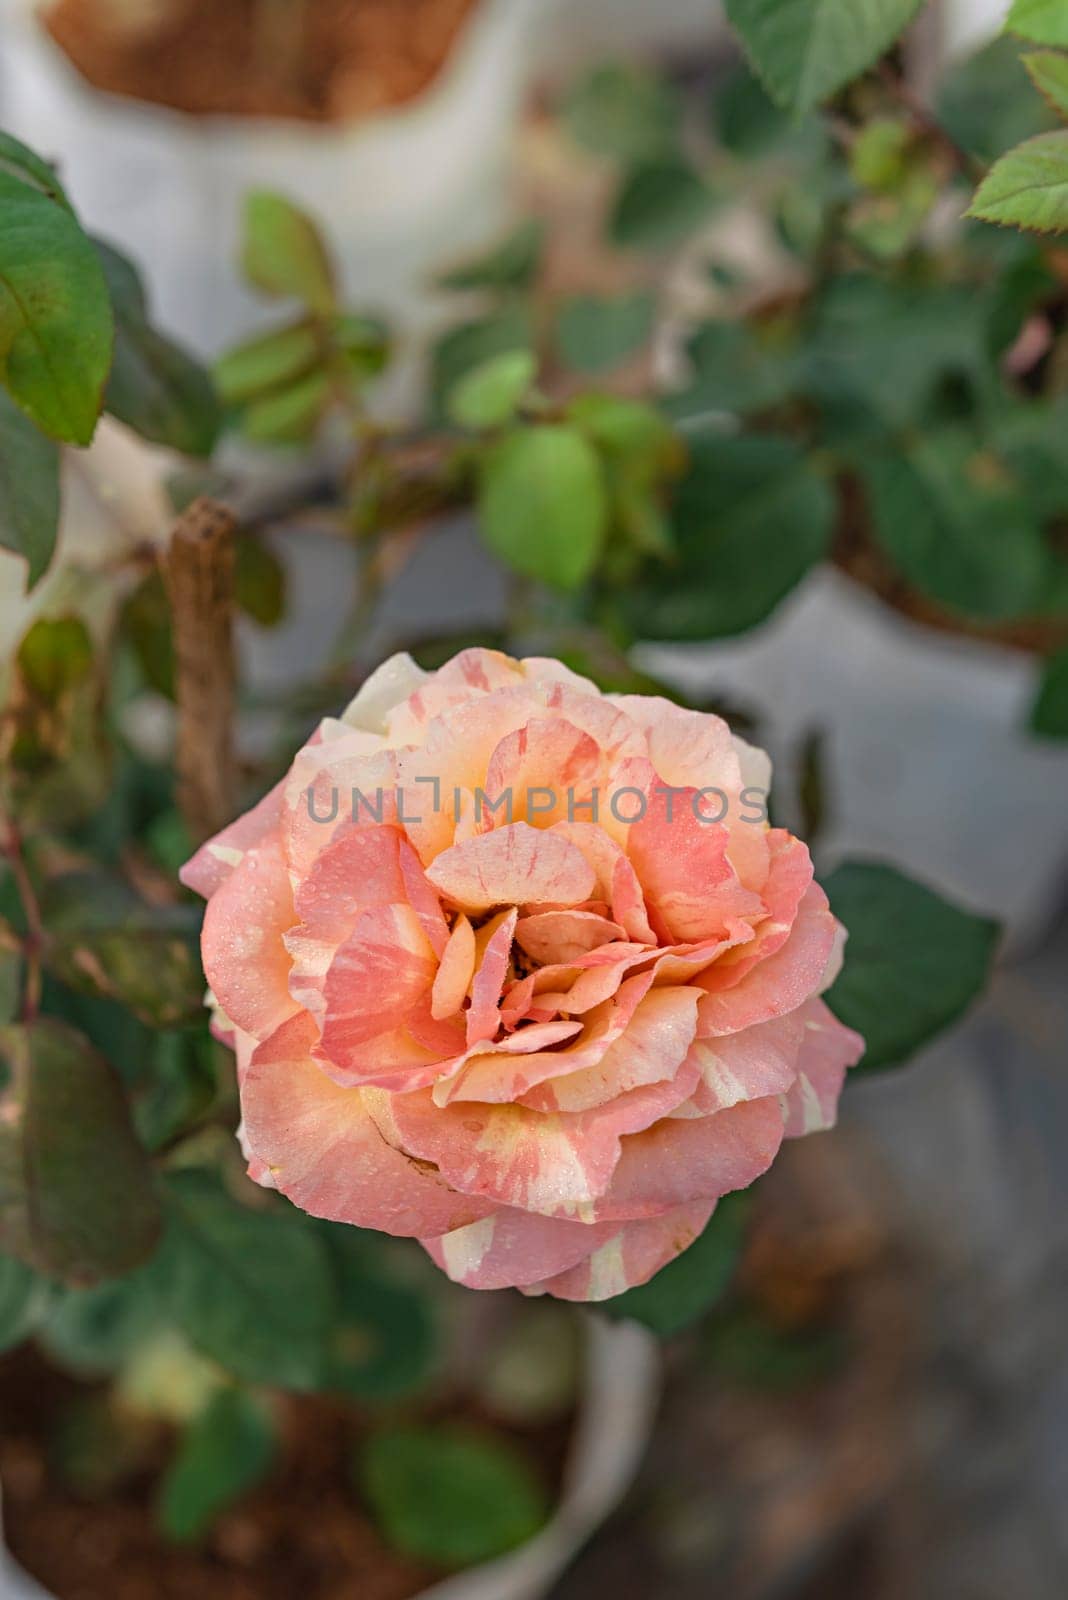 Close up of beautiful fresh rose flower in green garden